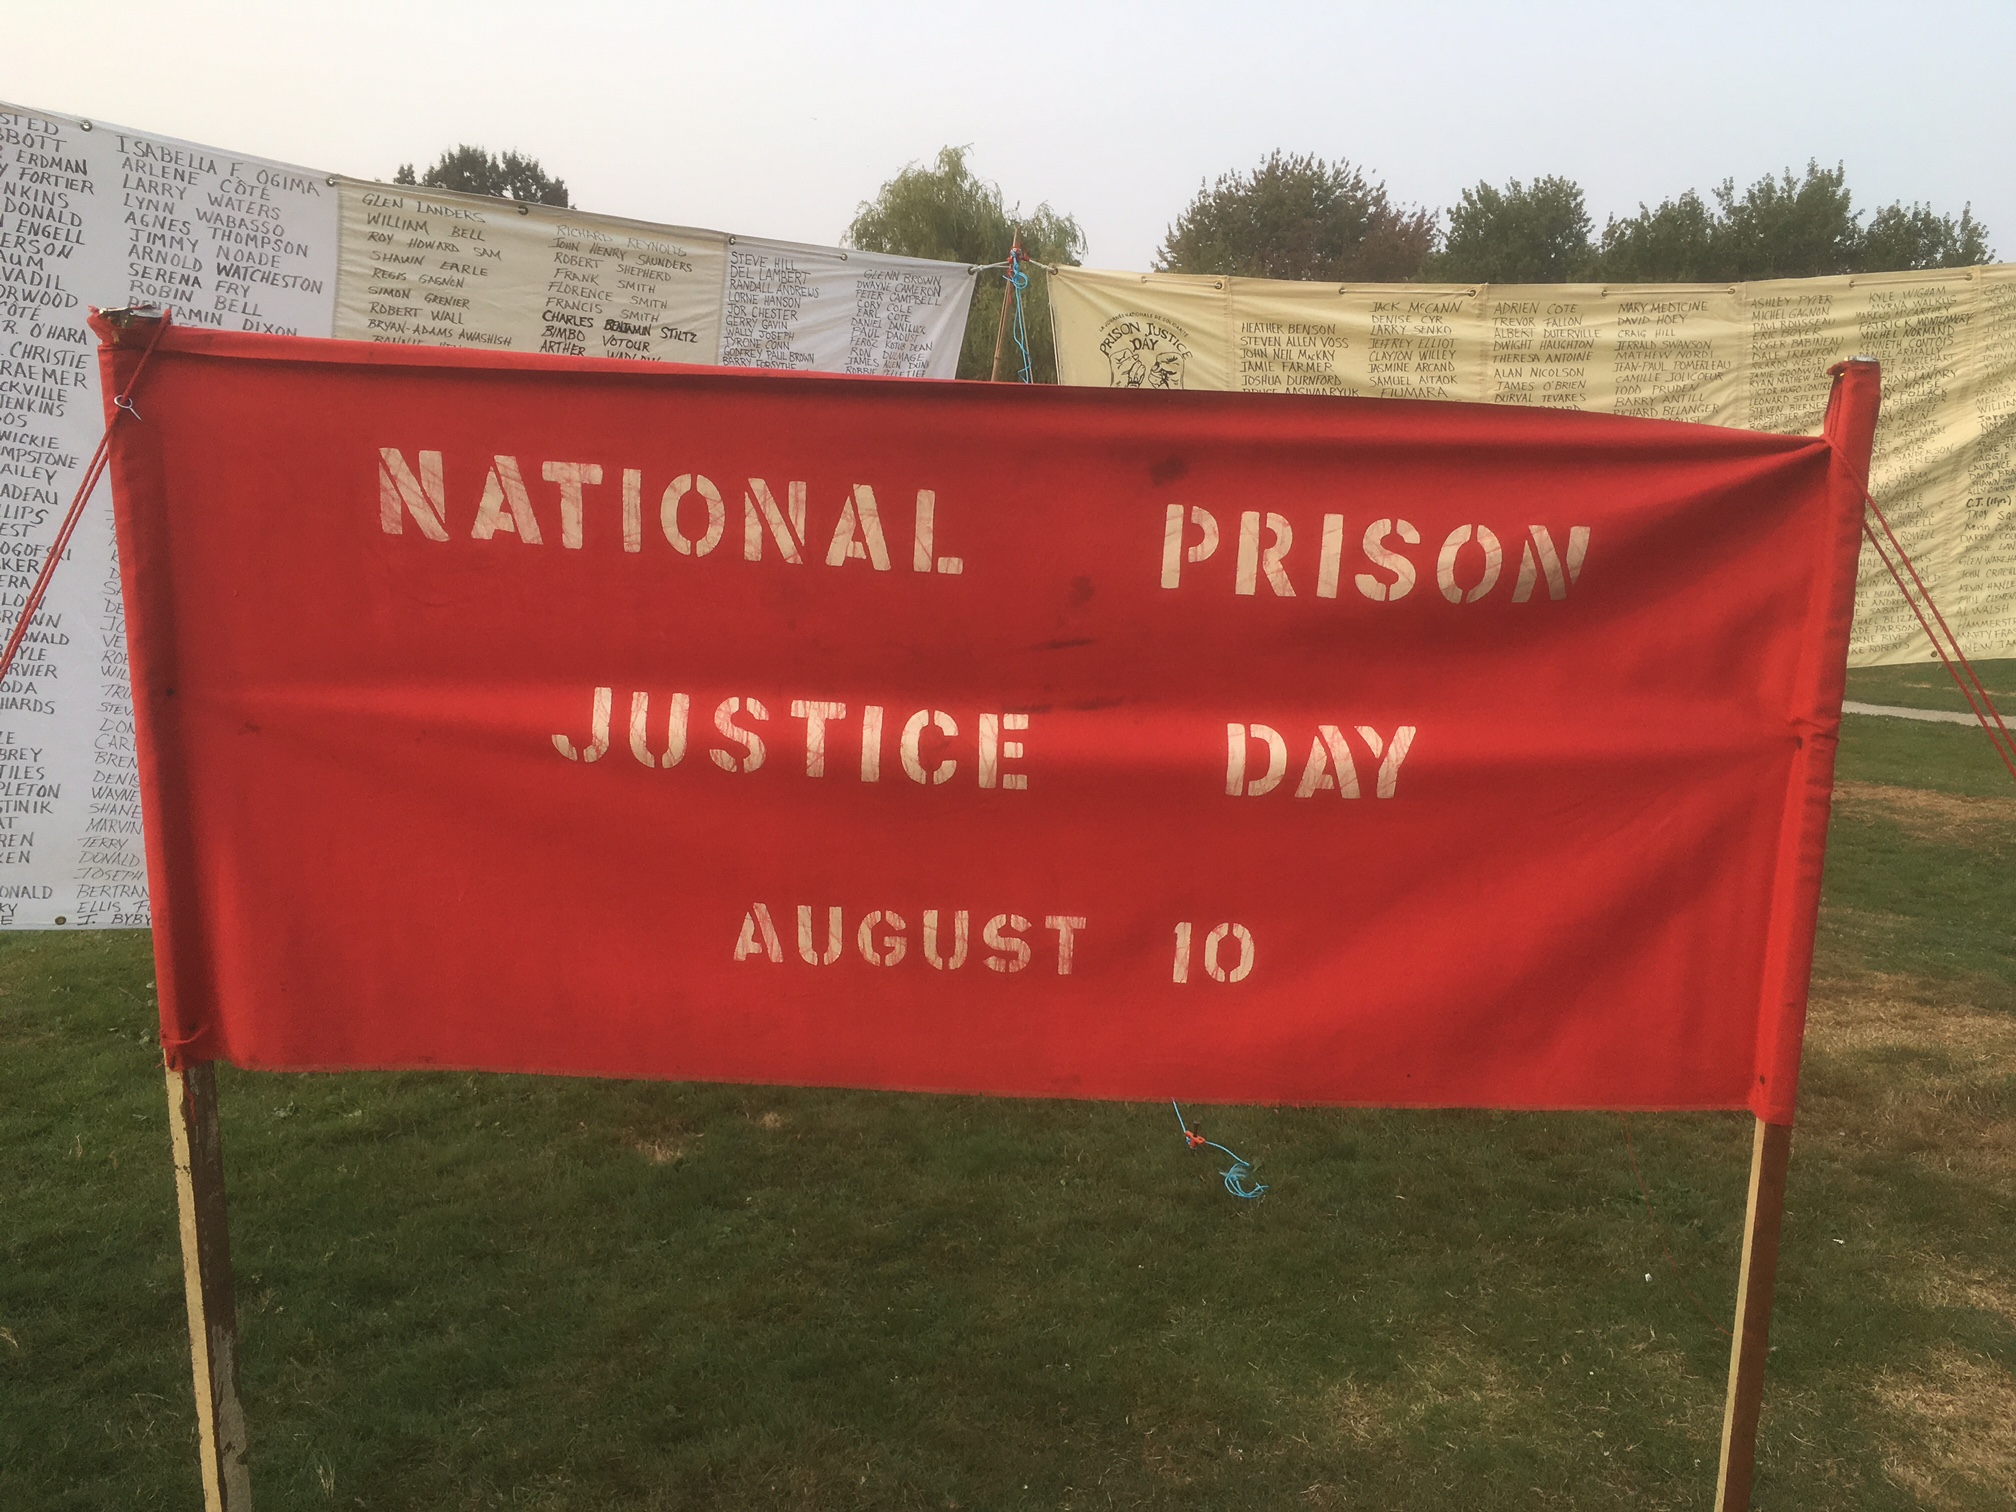 Prison justice day - August 10, 2017 (8).JPG